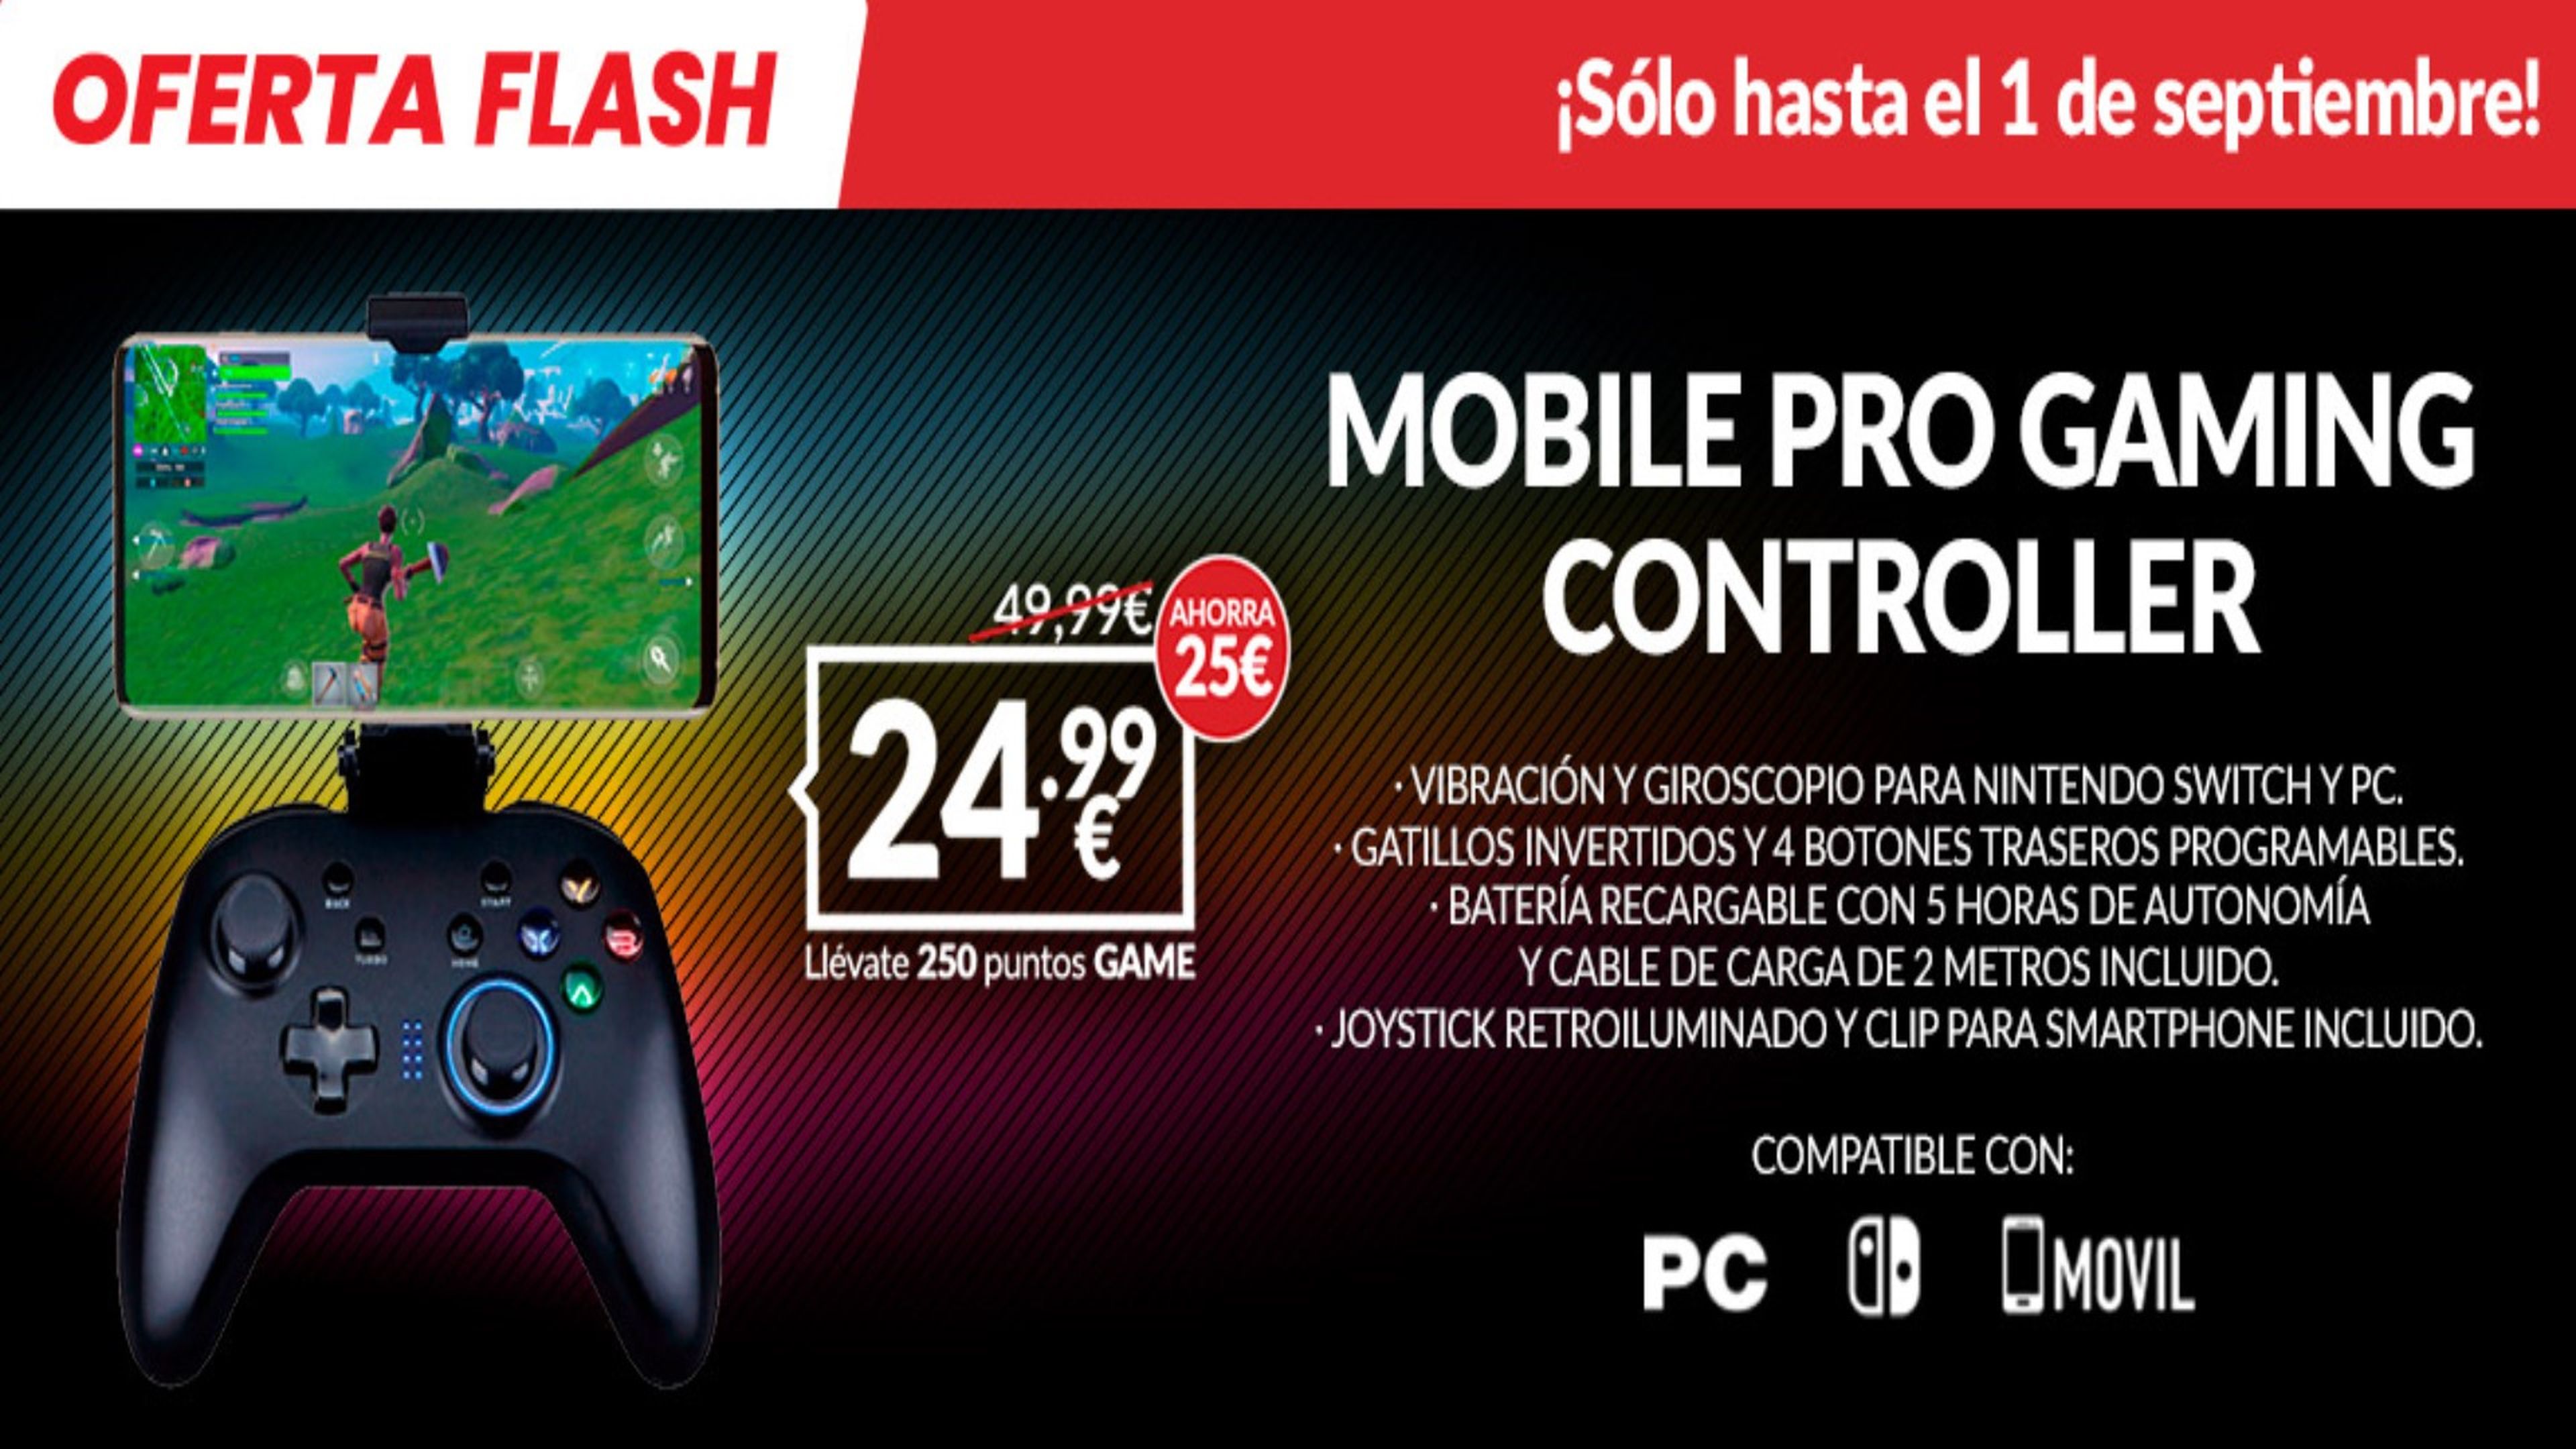 GAME rebaja en oferta flash el Mobile Pro Gaming Controller a 24